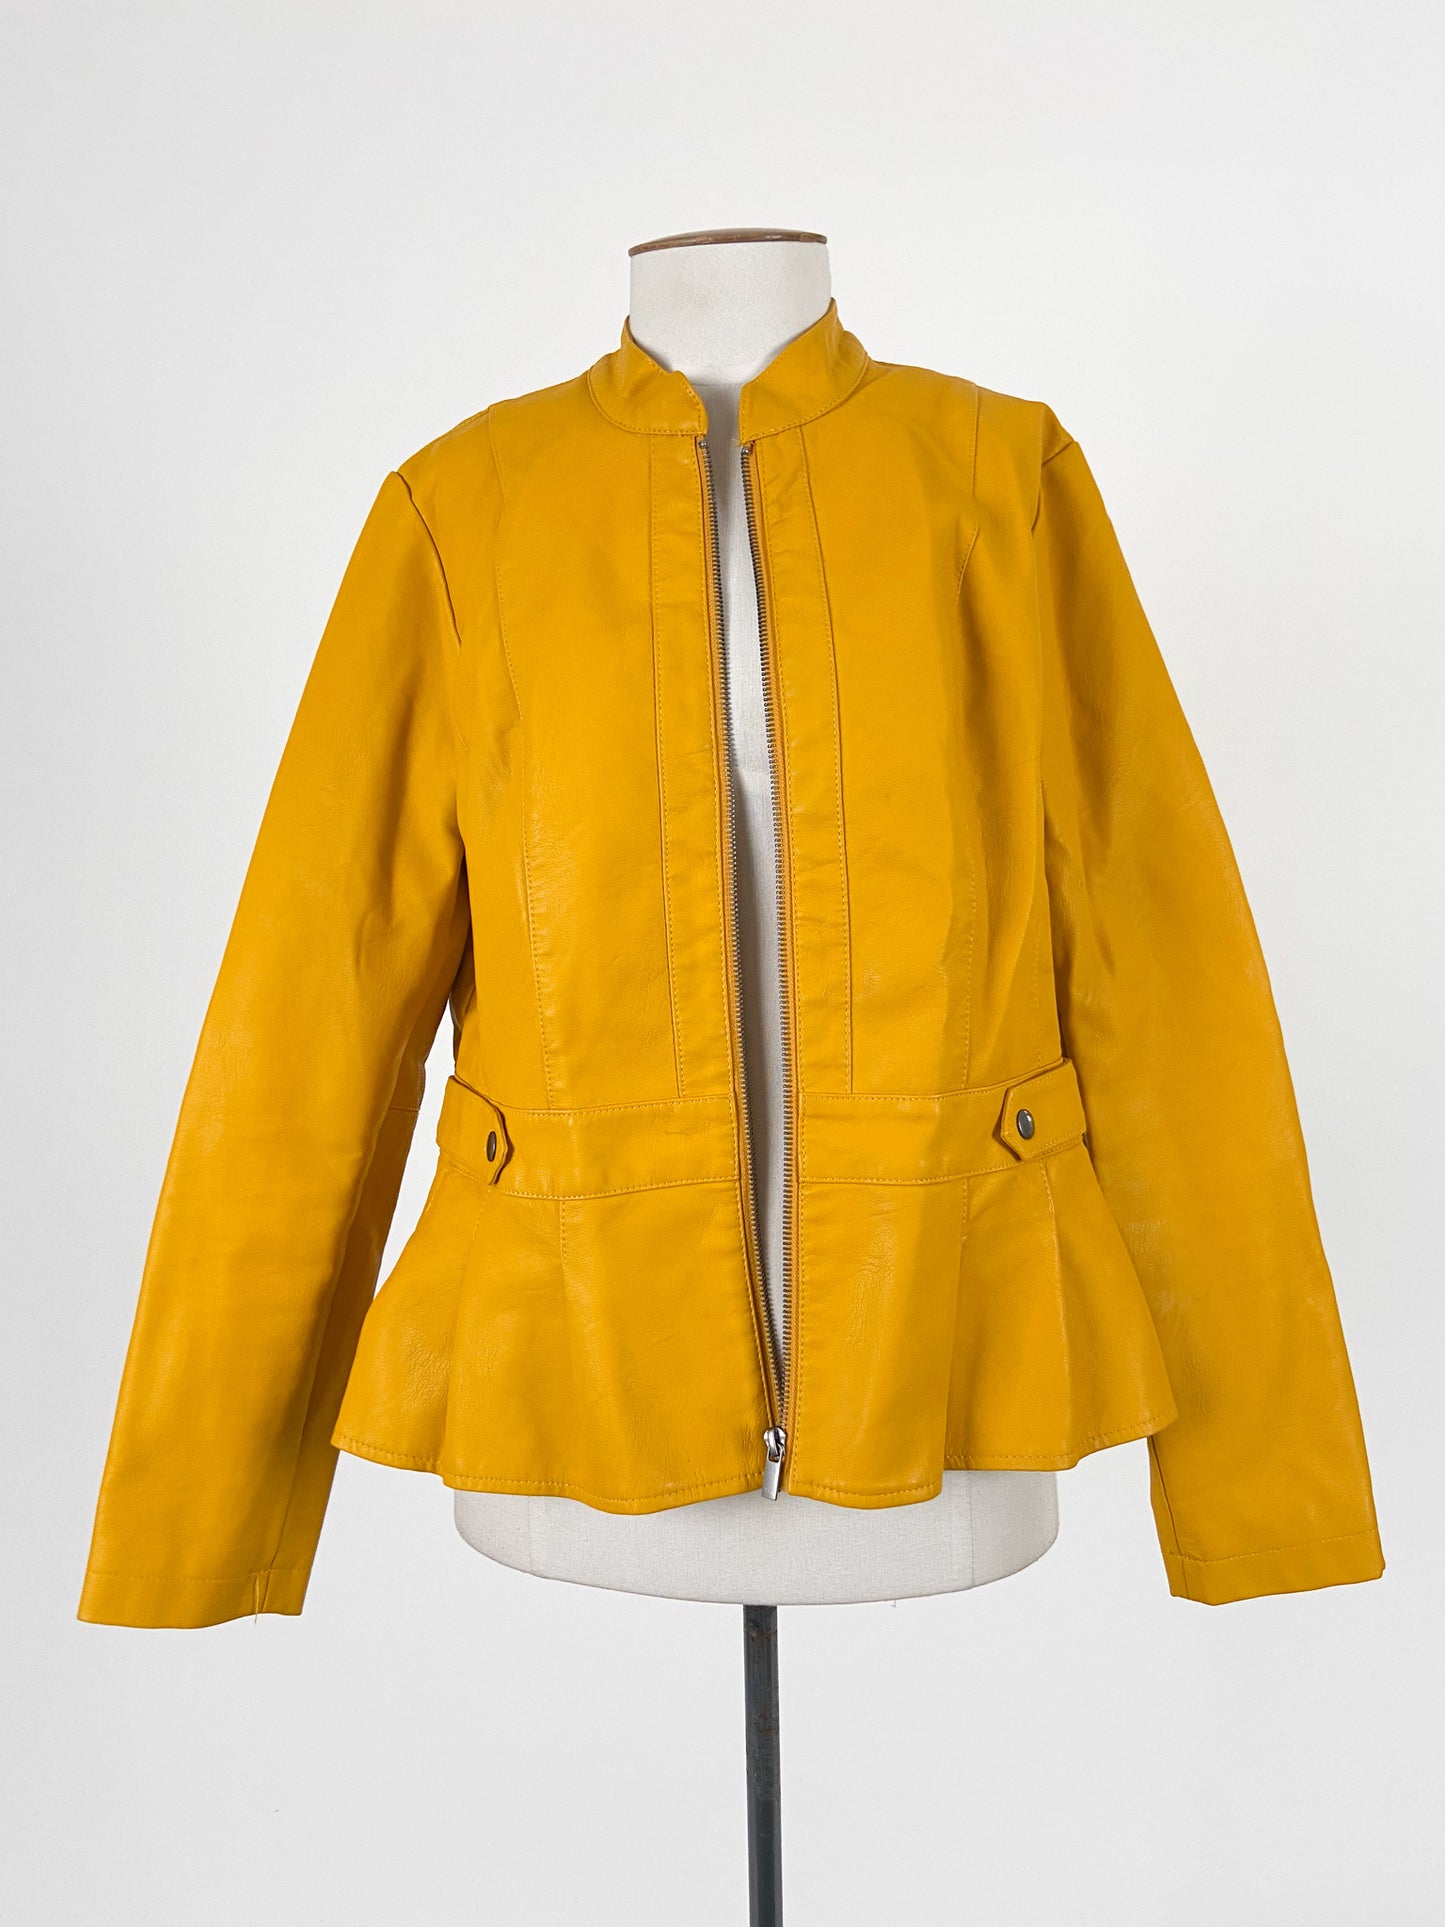 Baccini | Yellow Casual/Workwear Jacket | Size L